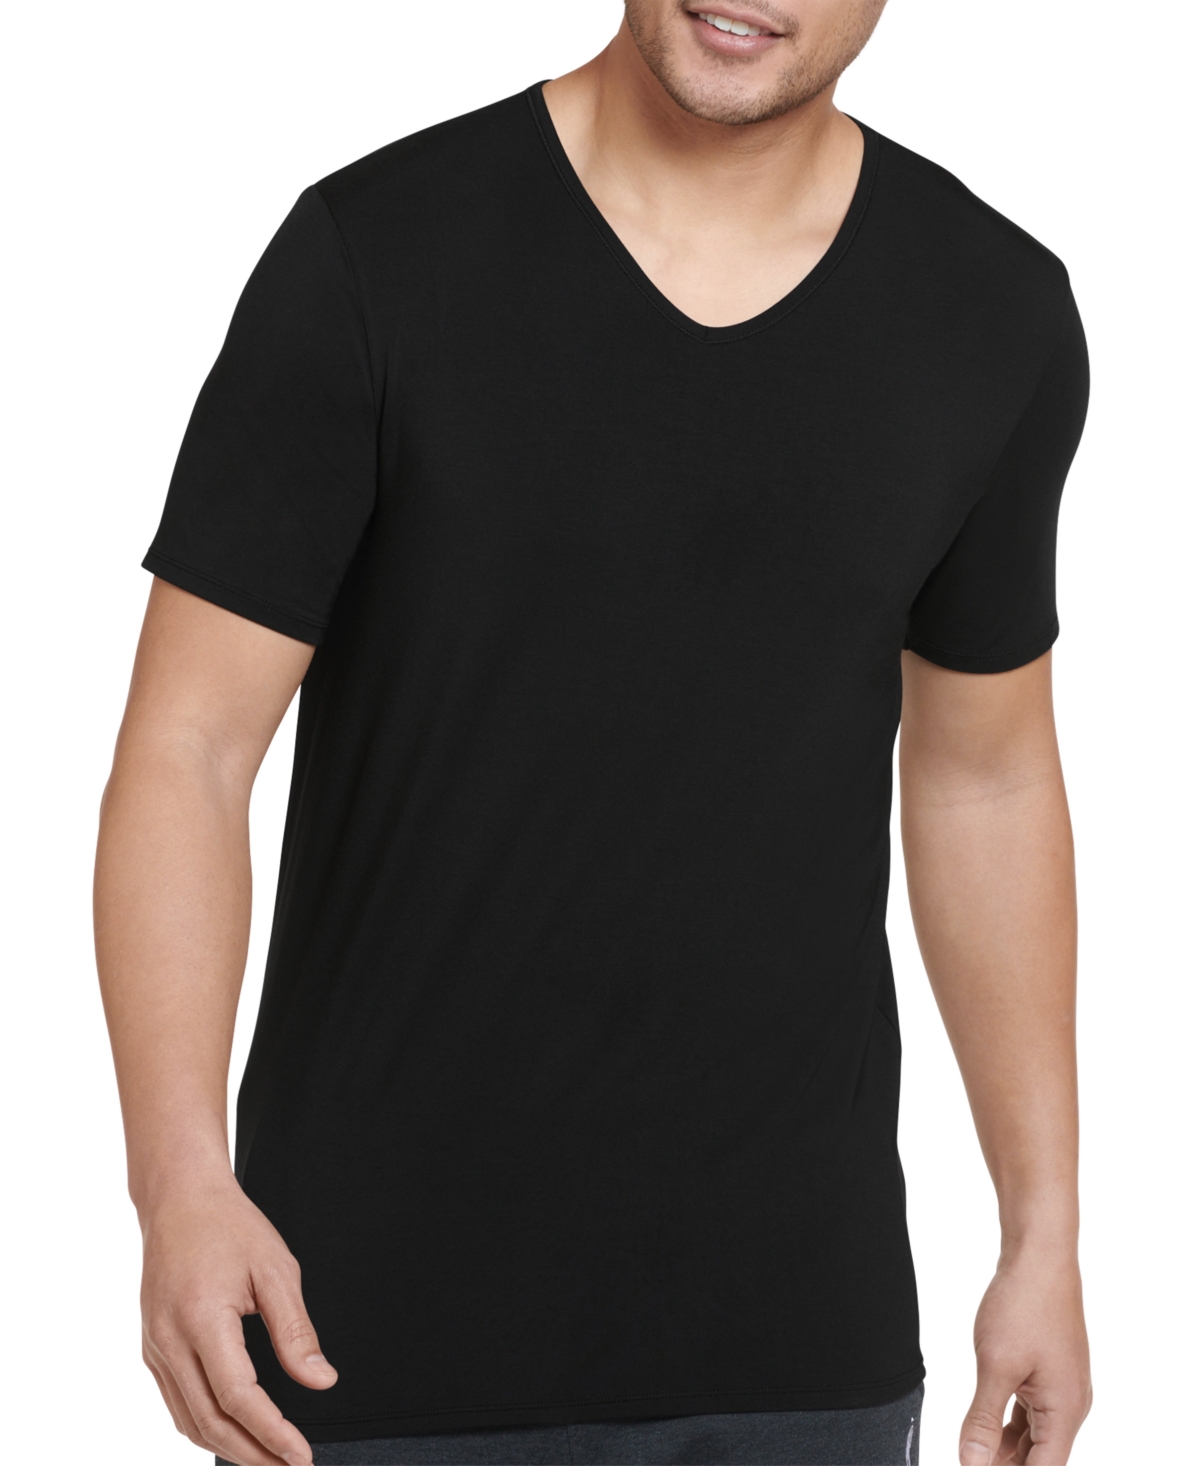 Men's Active Ultra Soft V-Neck T-Shirt - White